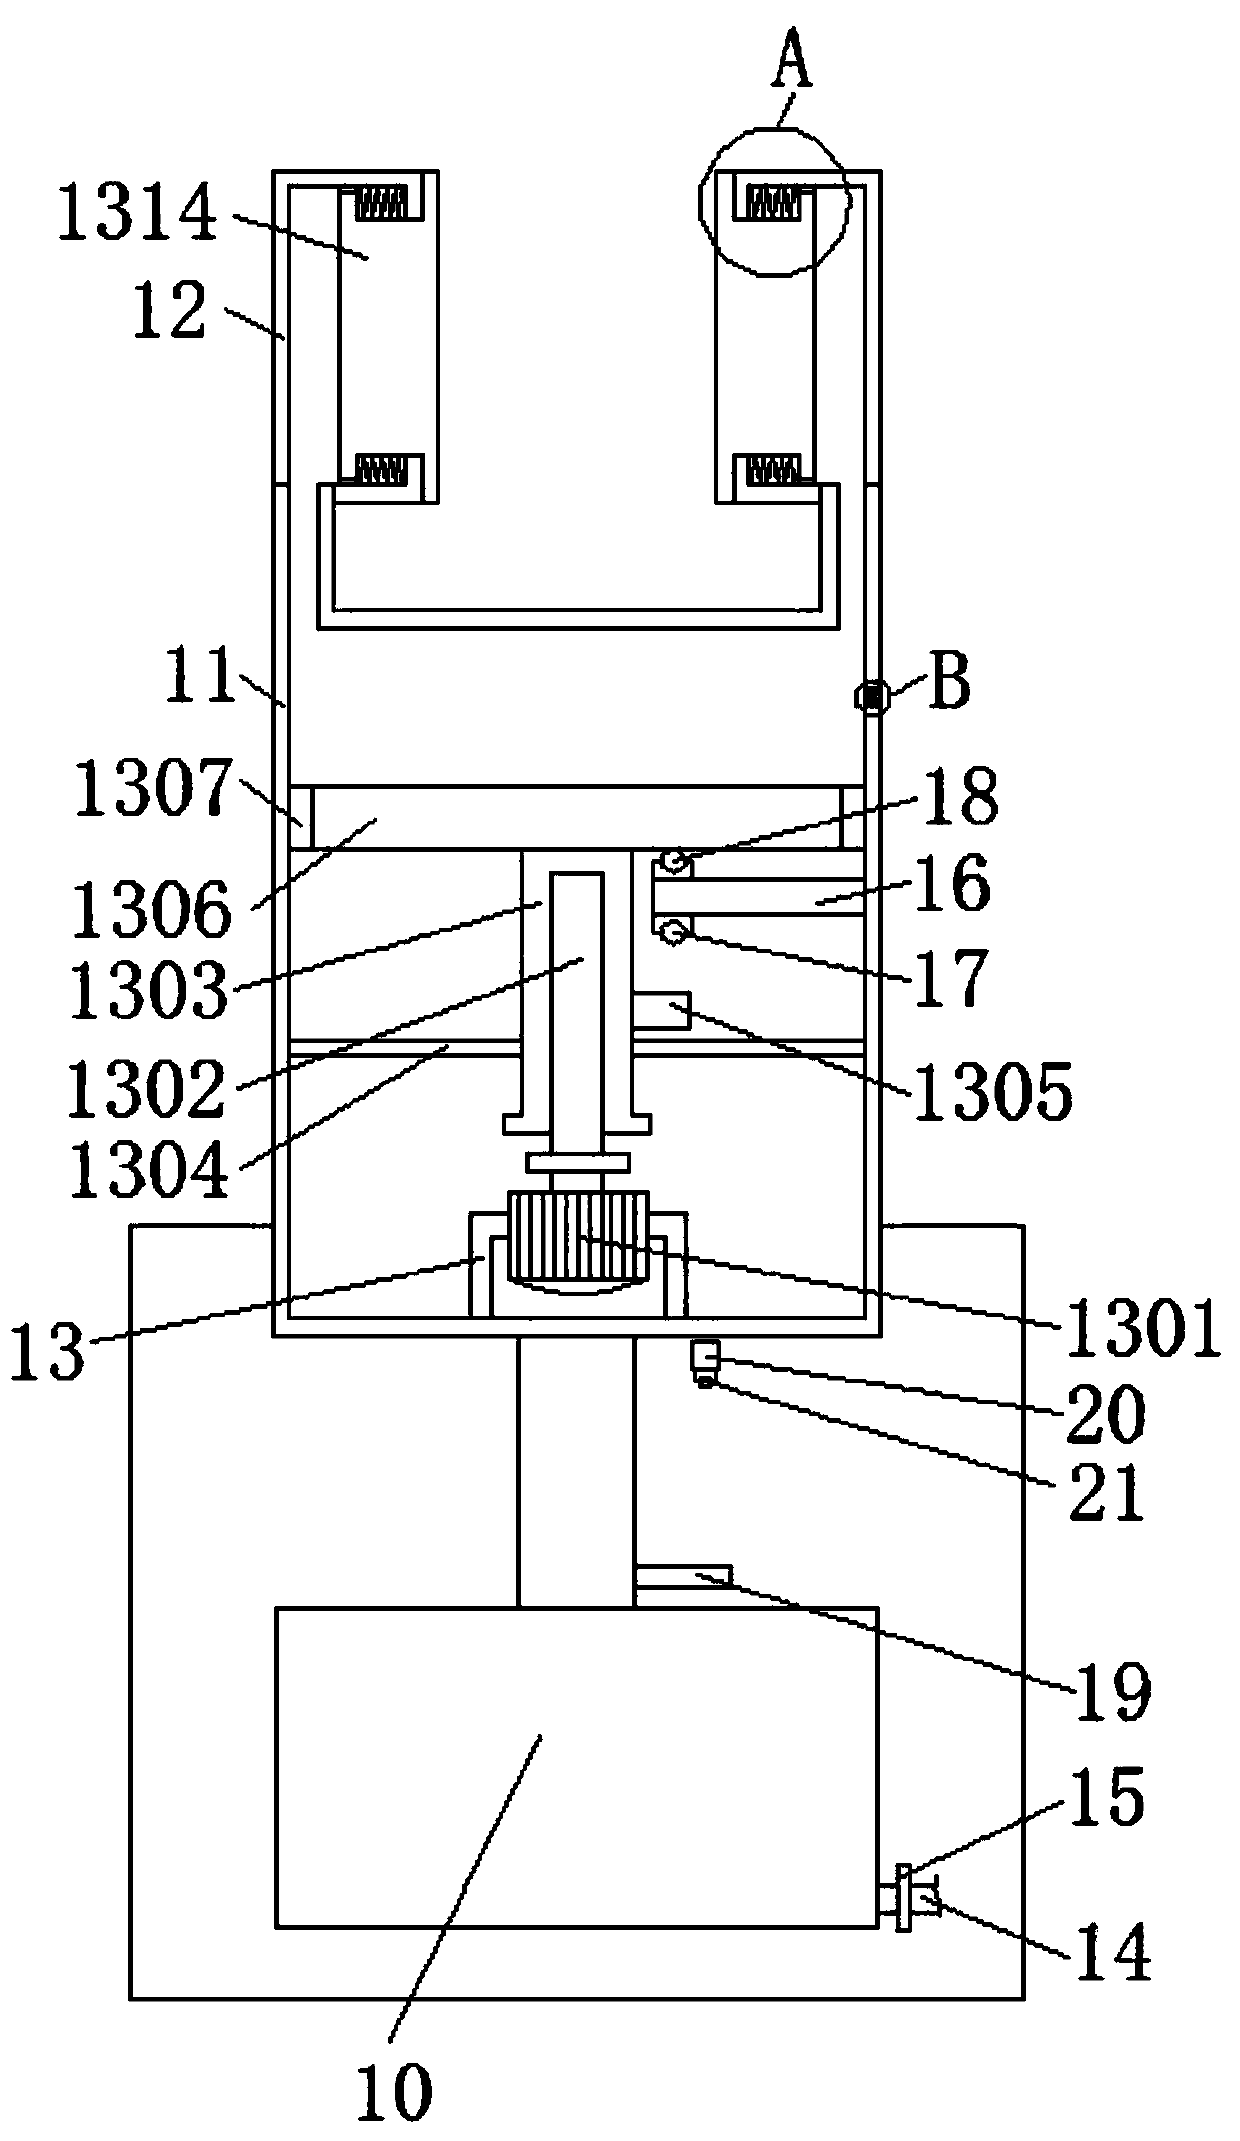 Full-automatic discharging manipulator for slicer